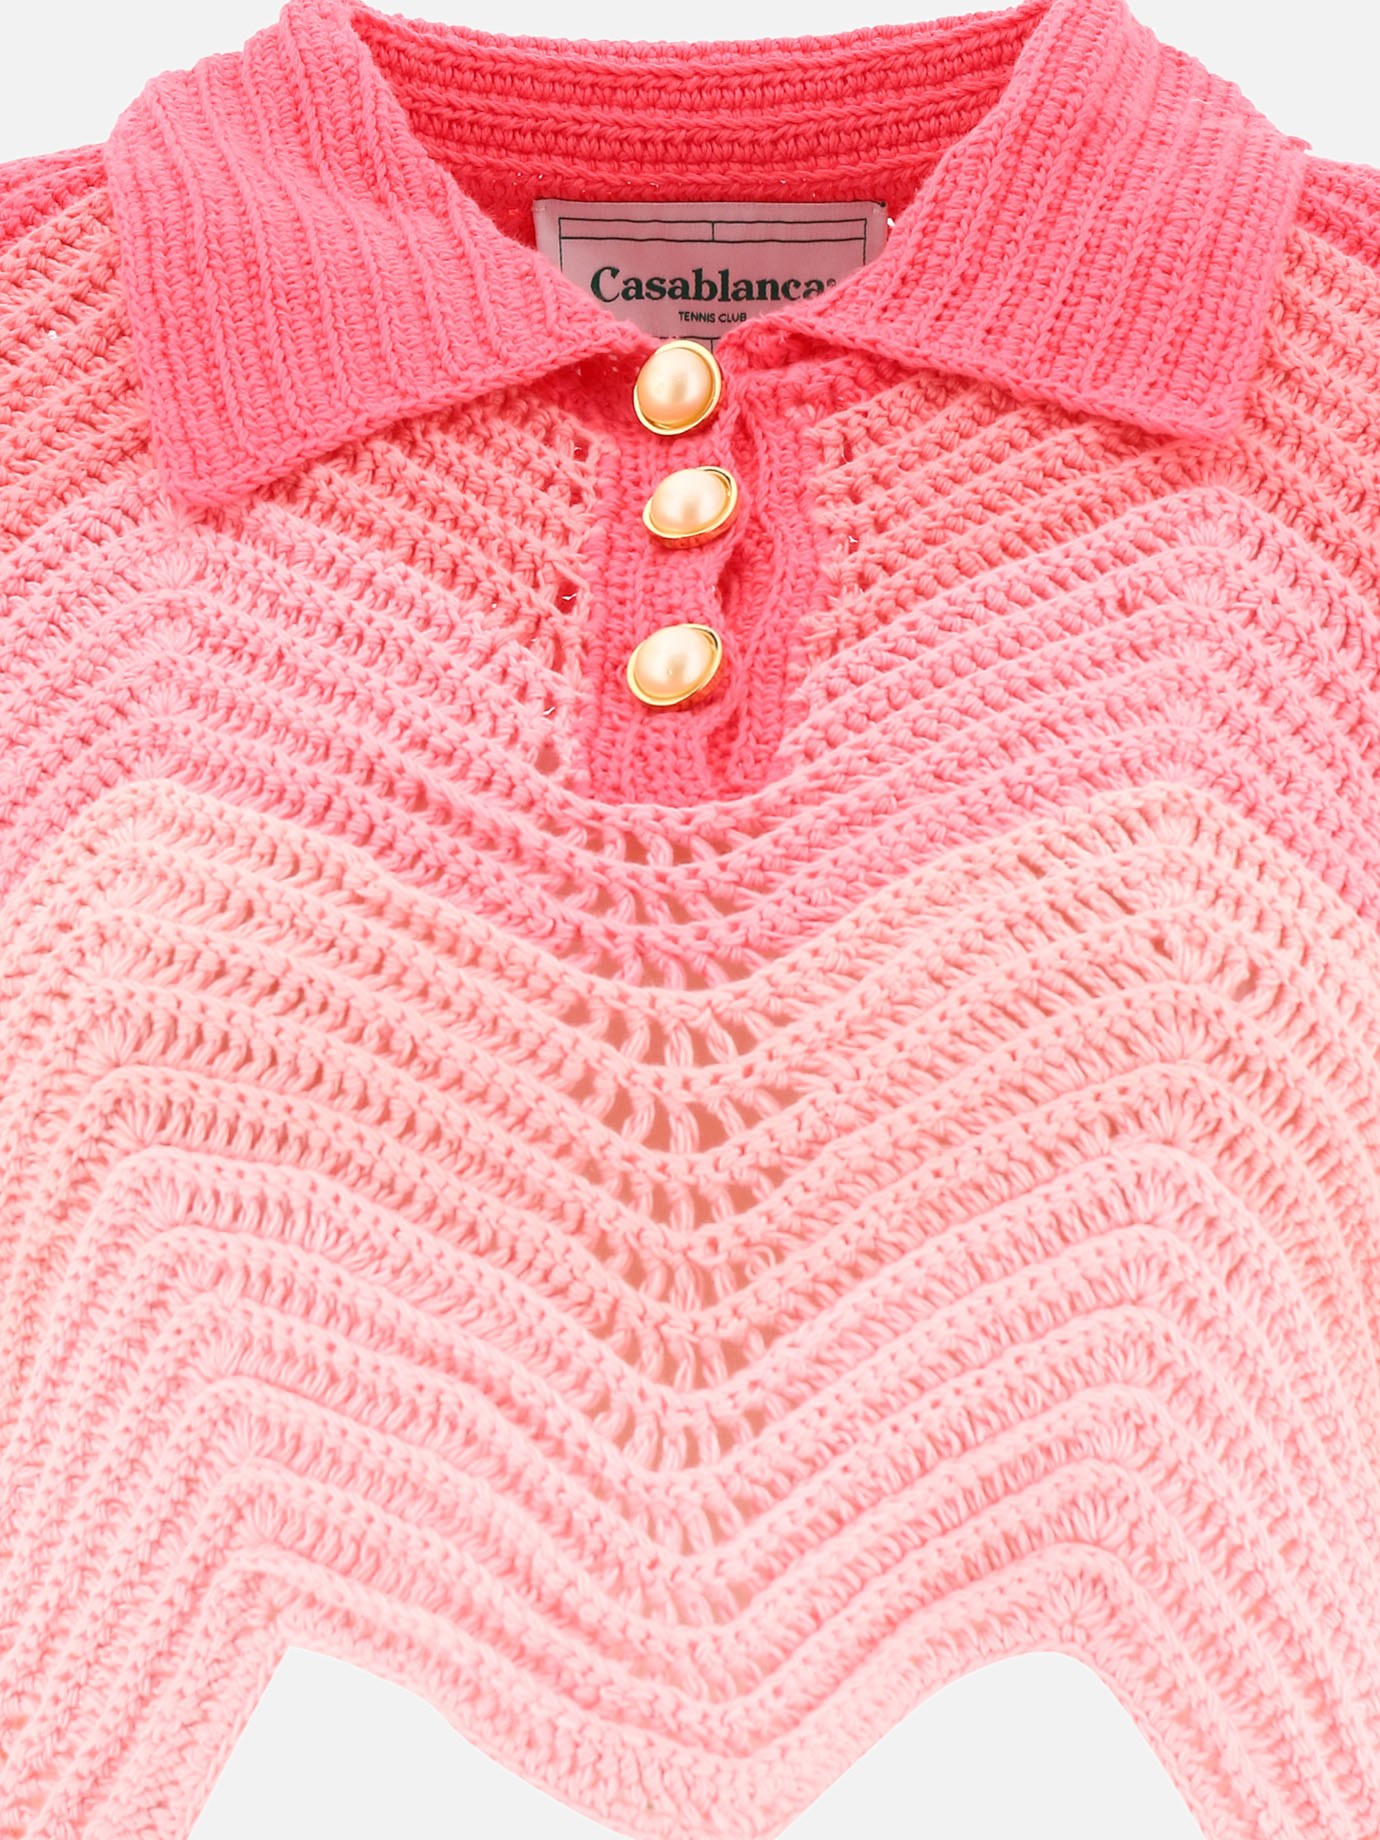  Crochet  knit polo shirt by Casablanca